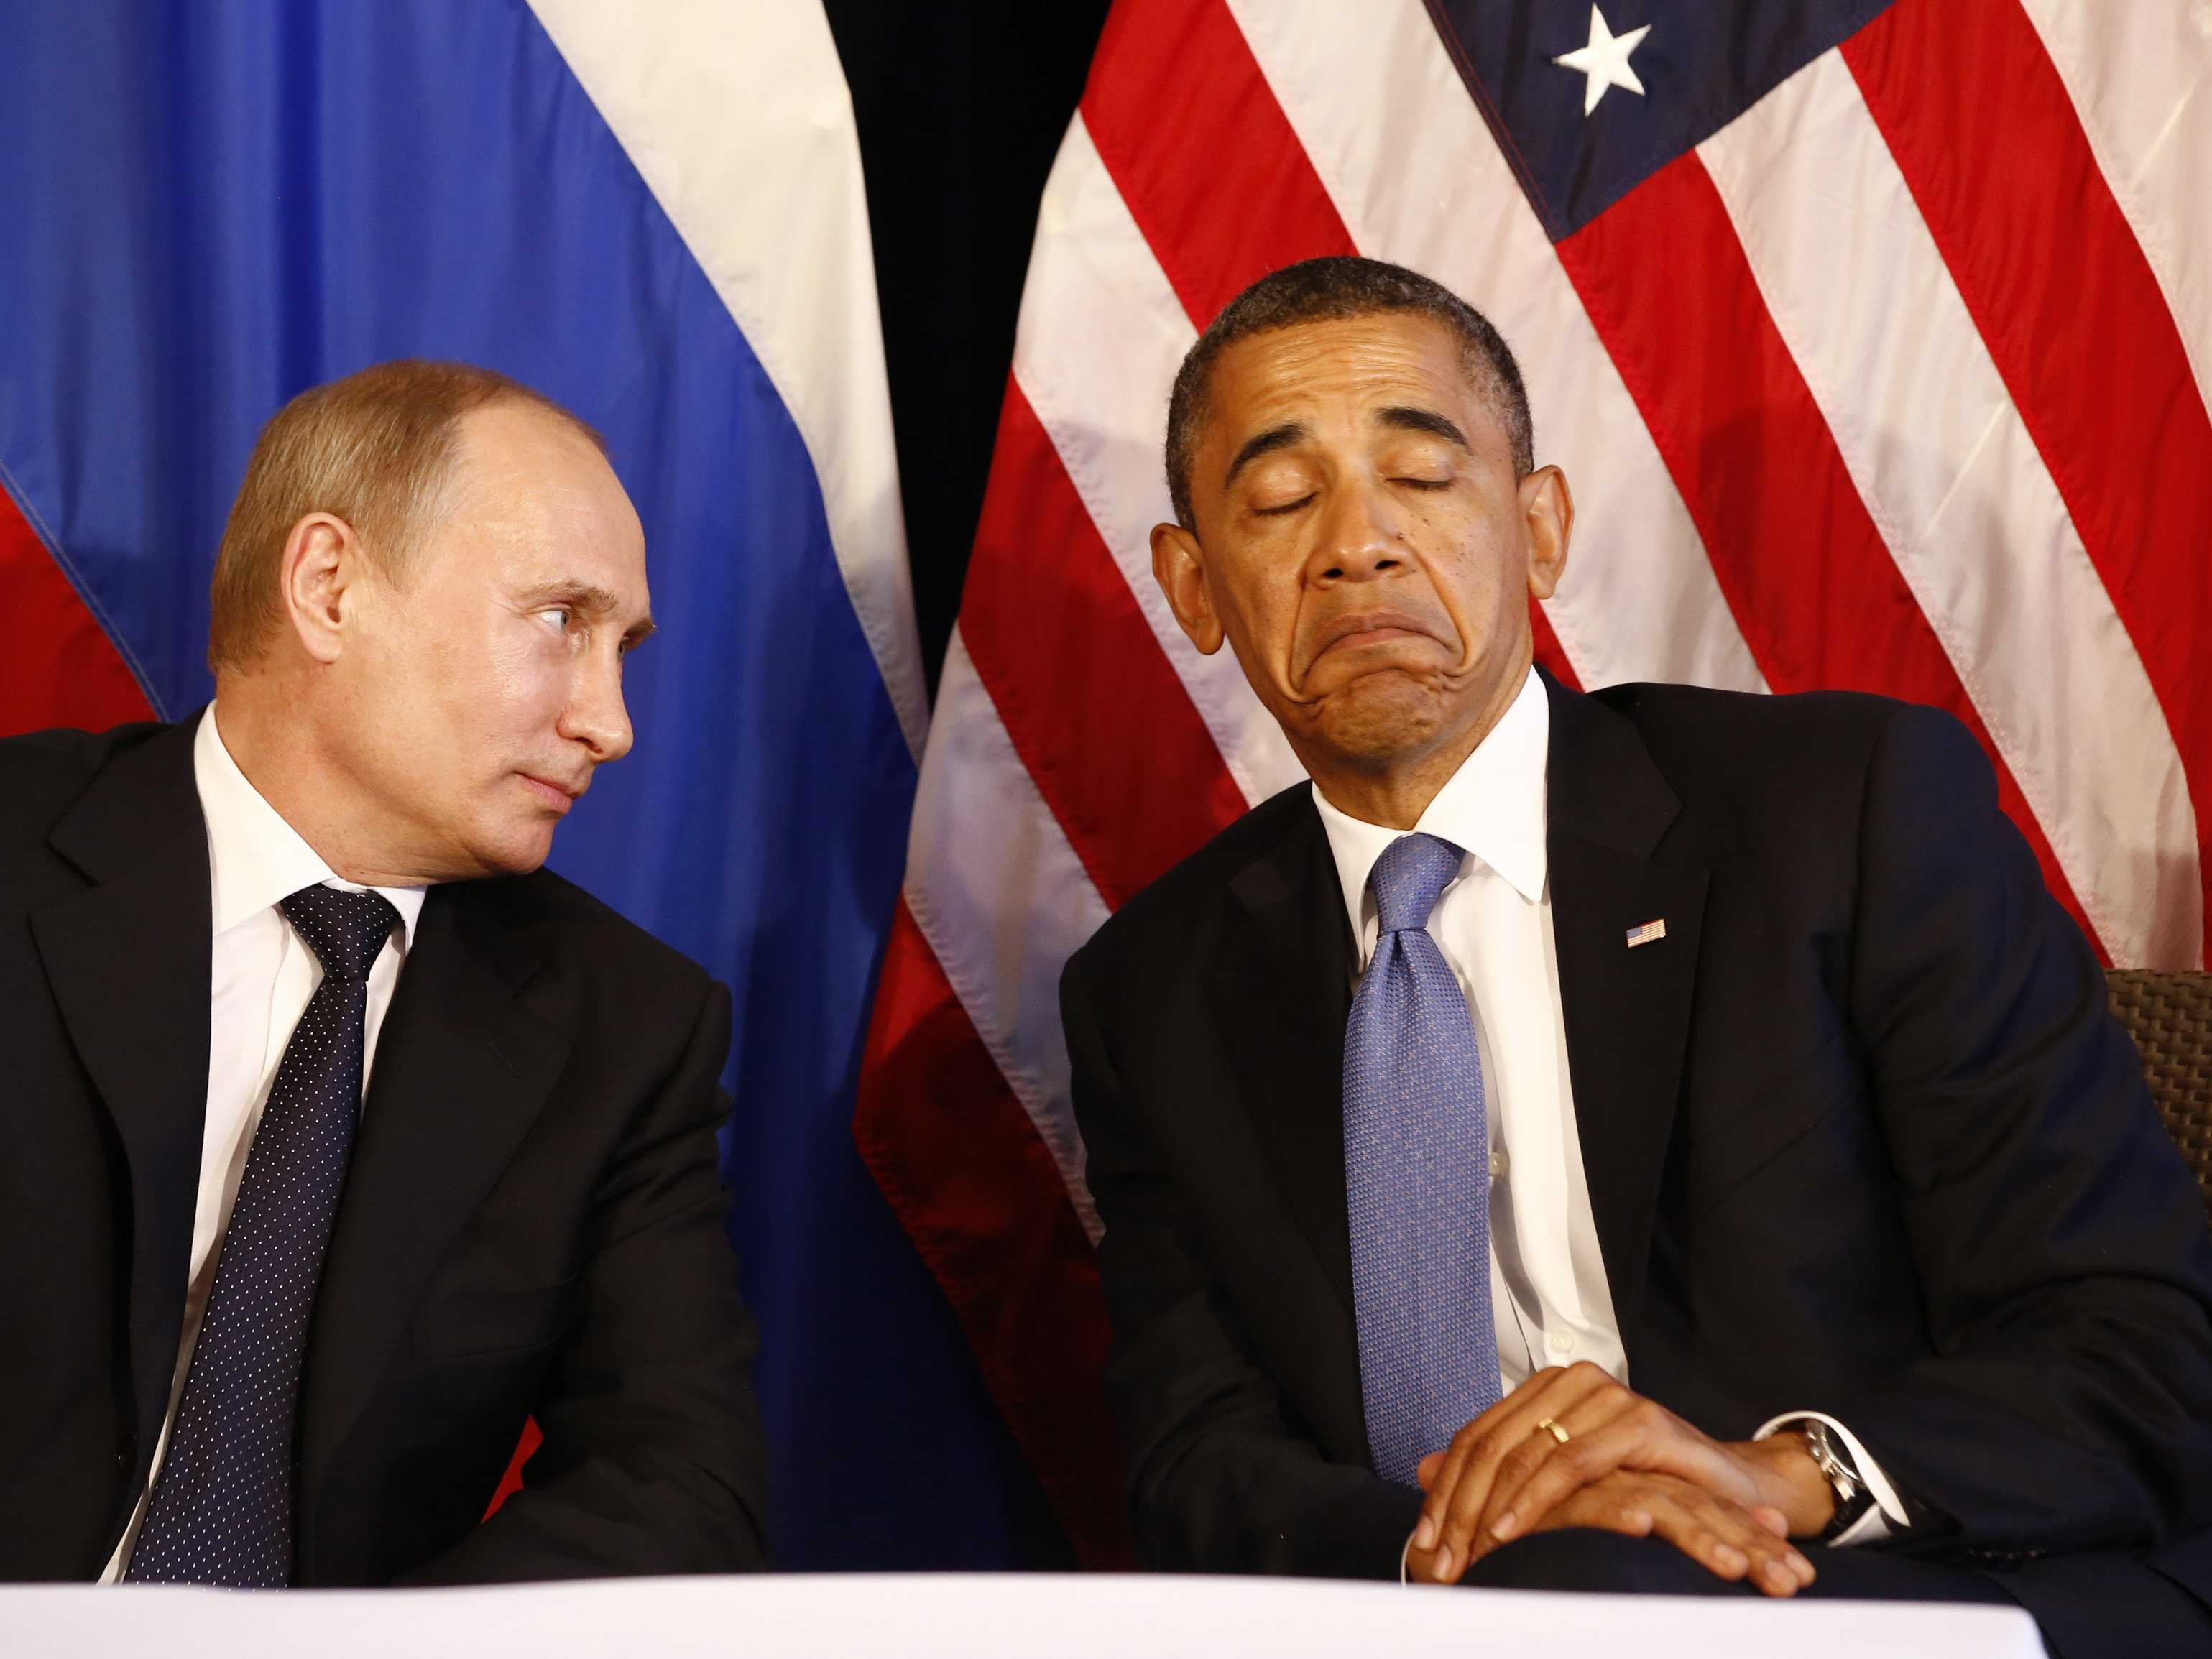 putin-obama-lsanctions-against-russia-yet.jpg